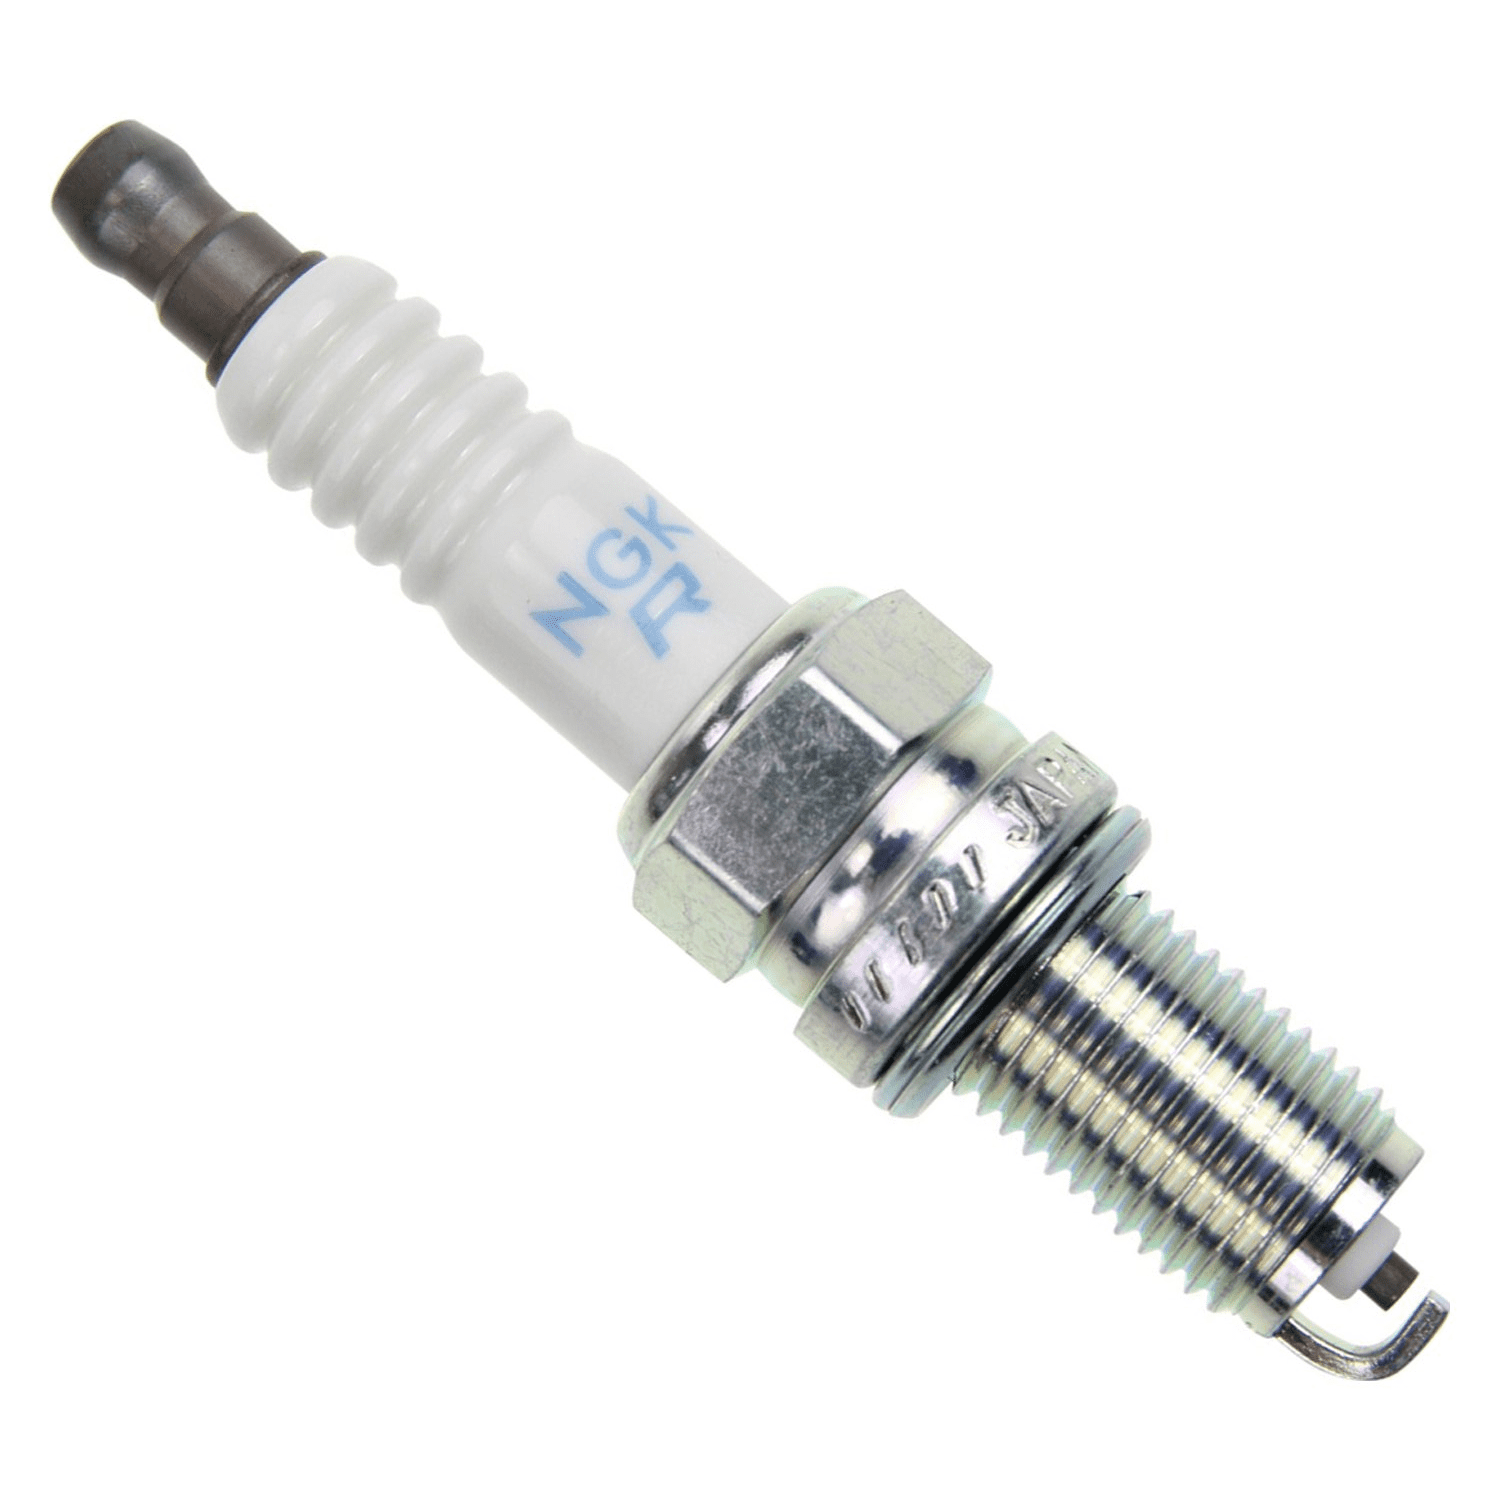 NGK Standard Series Spark Plug BPR6ES Compatible With CUB CADET Lawn Mower  XT1 LT42 C, XT2 LX42 EFI